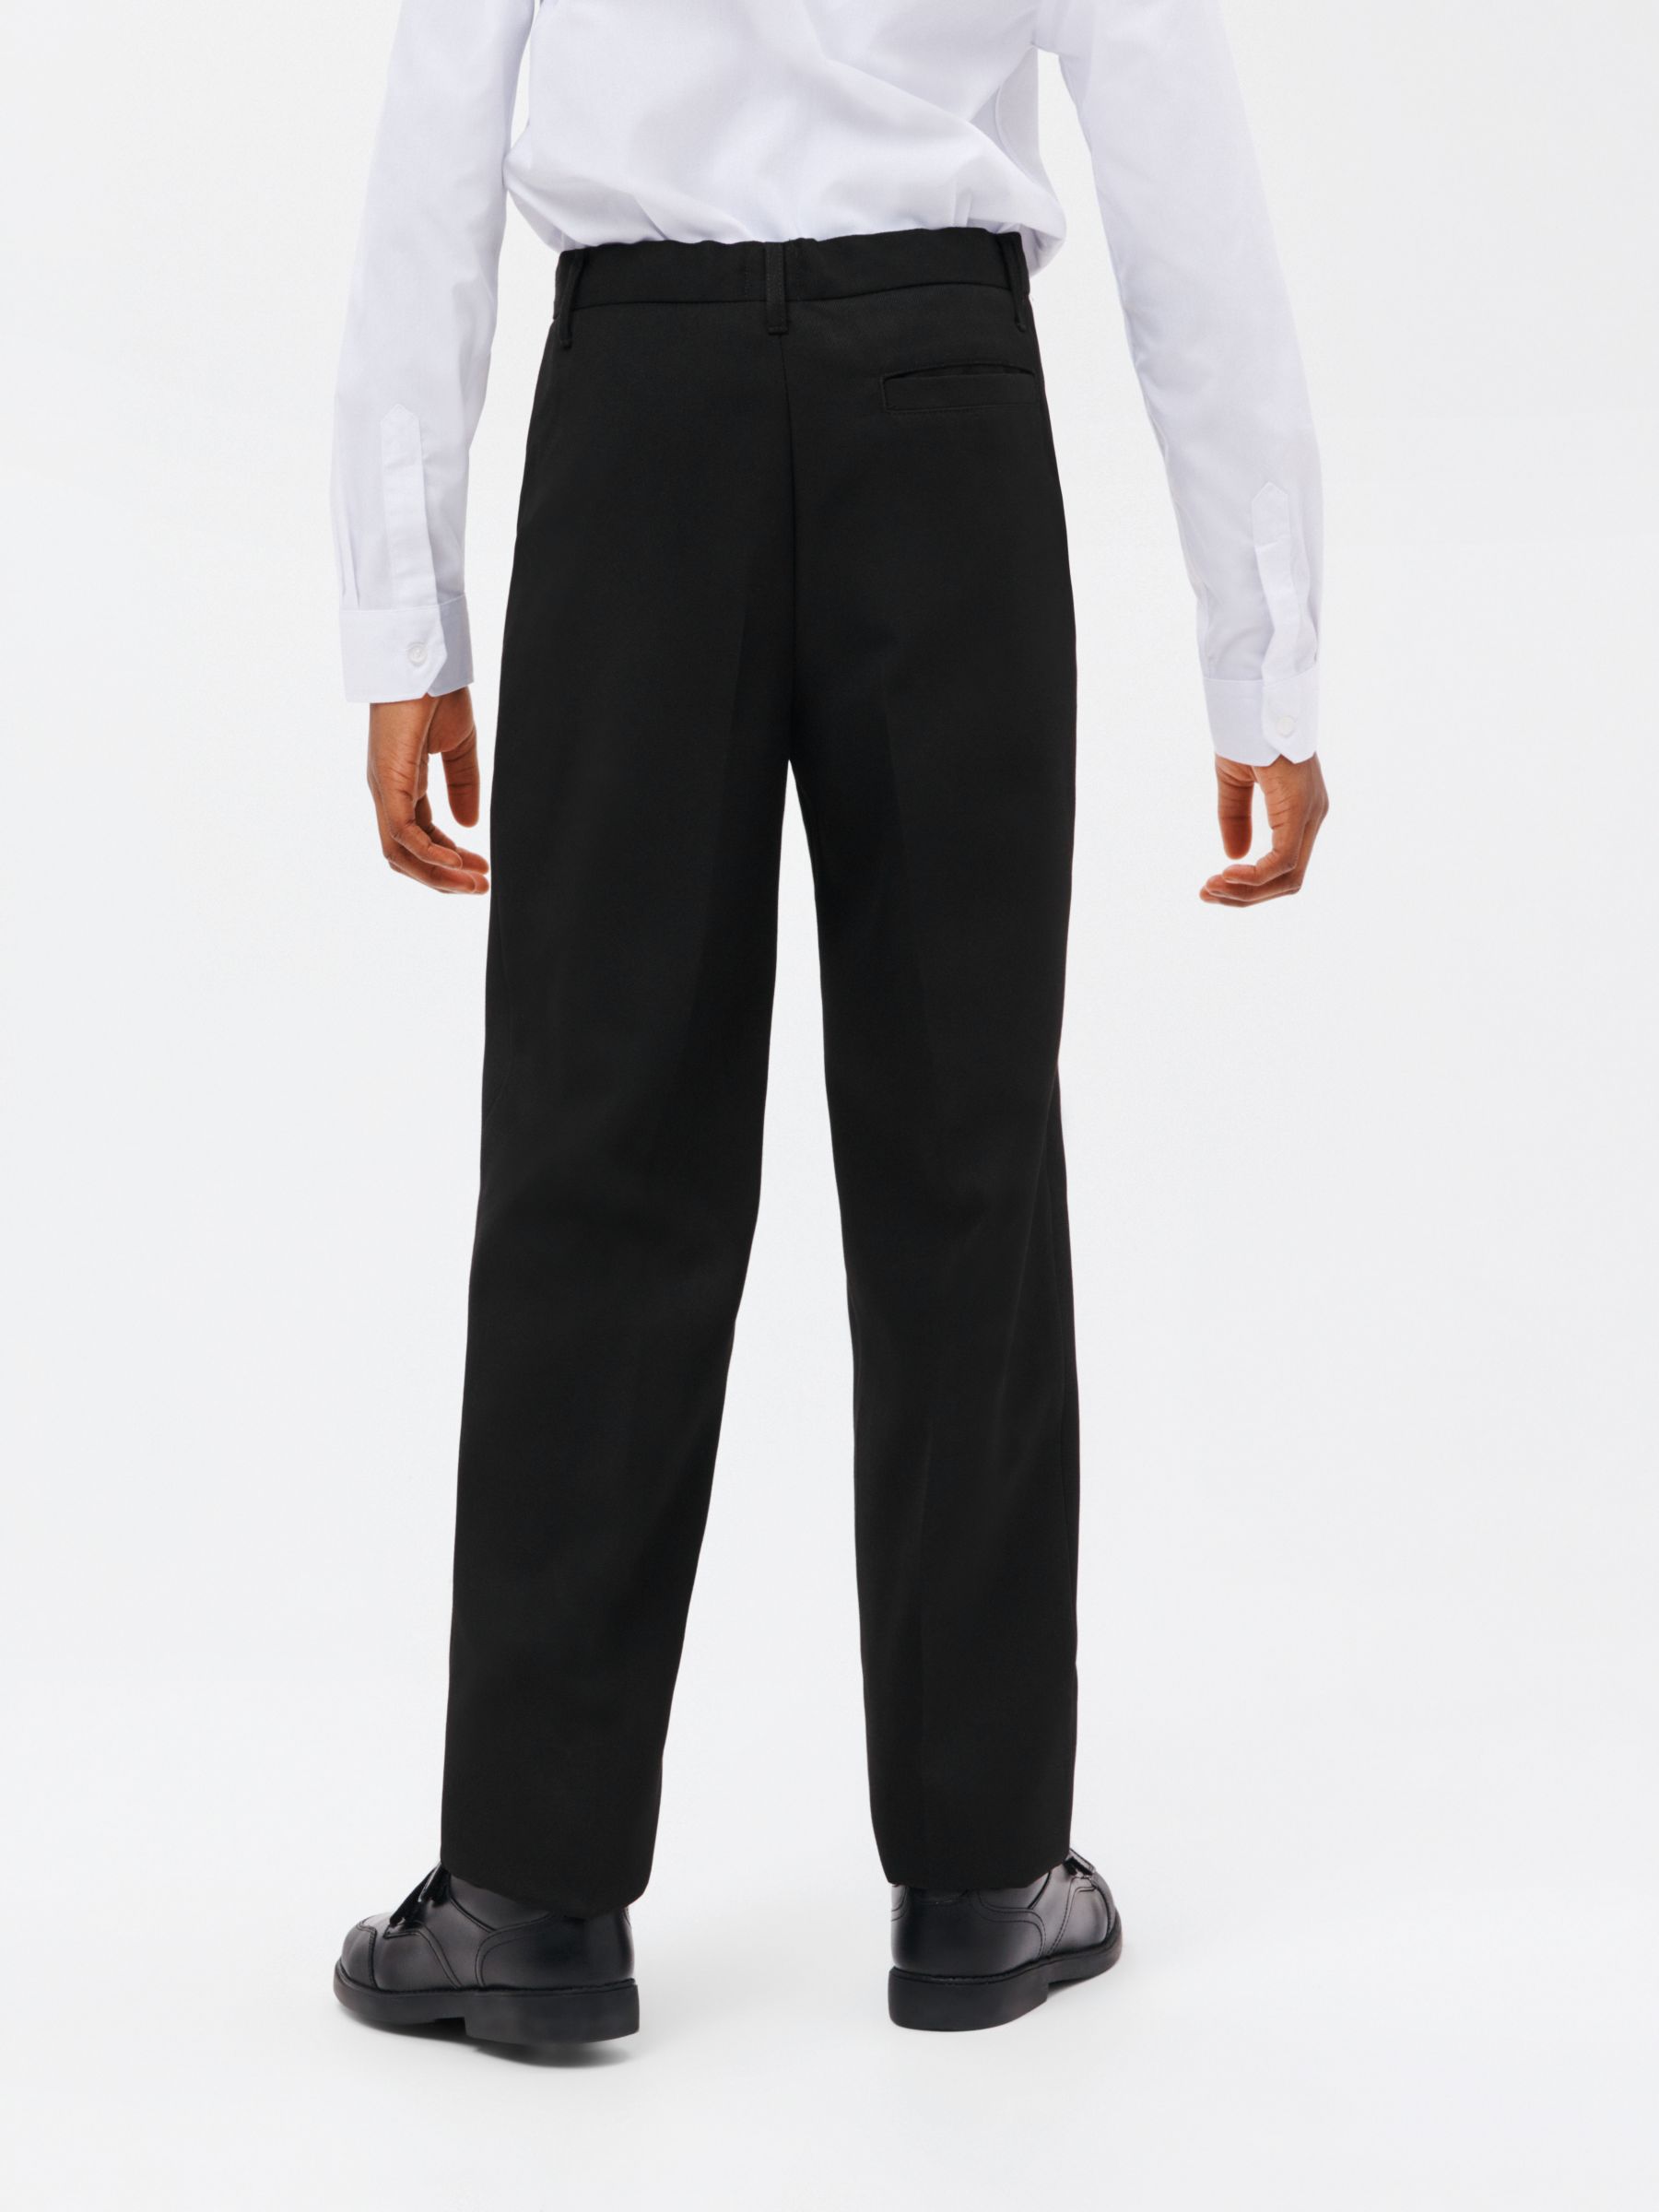 John Lewis Kids' Regular Fit Long Length School Trousers, Black at John ...